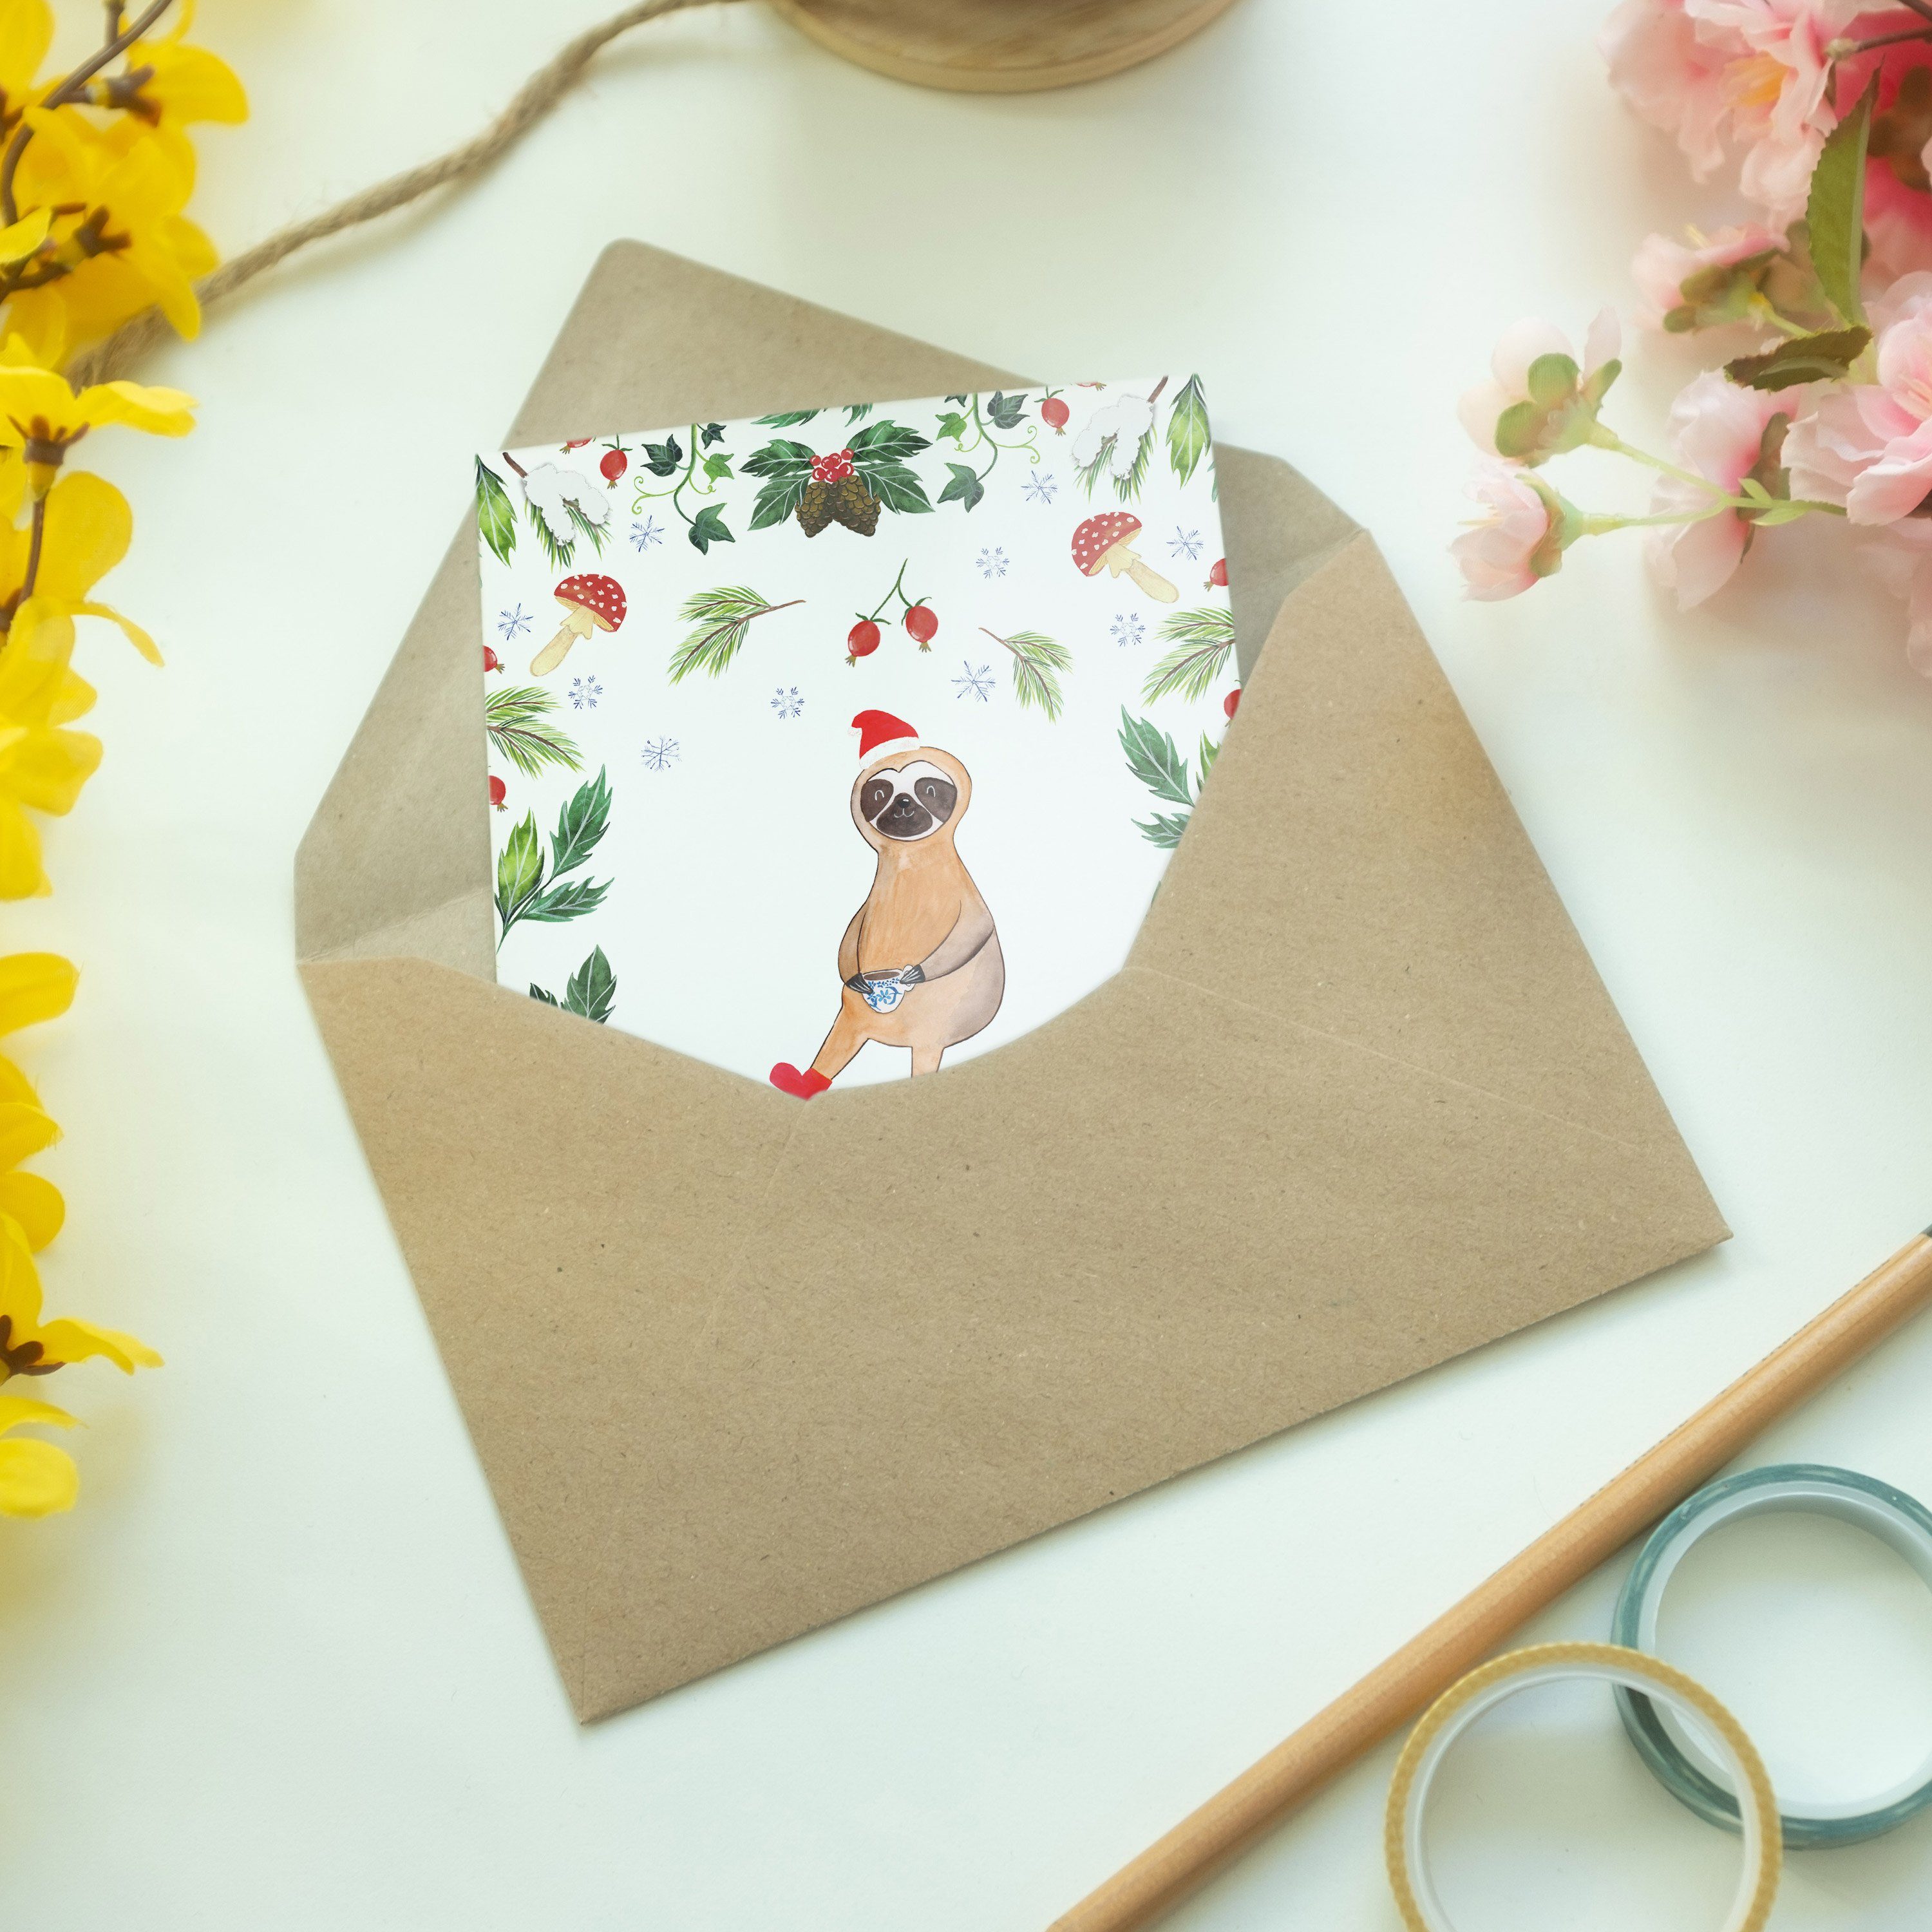 Mr. & Grußkarte Kakao Geburtstagskarte, Faultier Weiß - - Heiligabend, Geschenk, Kart Panda Mrs